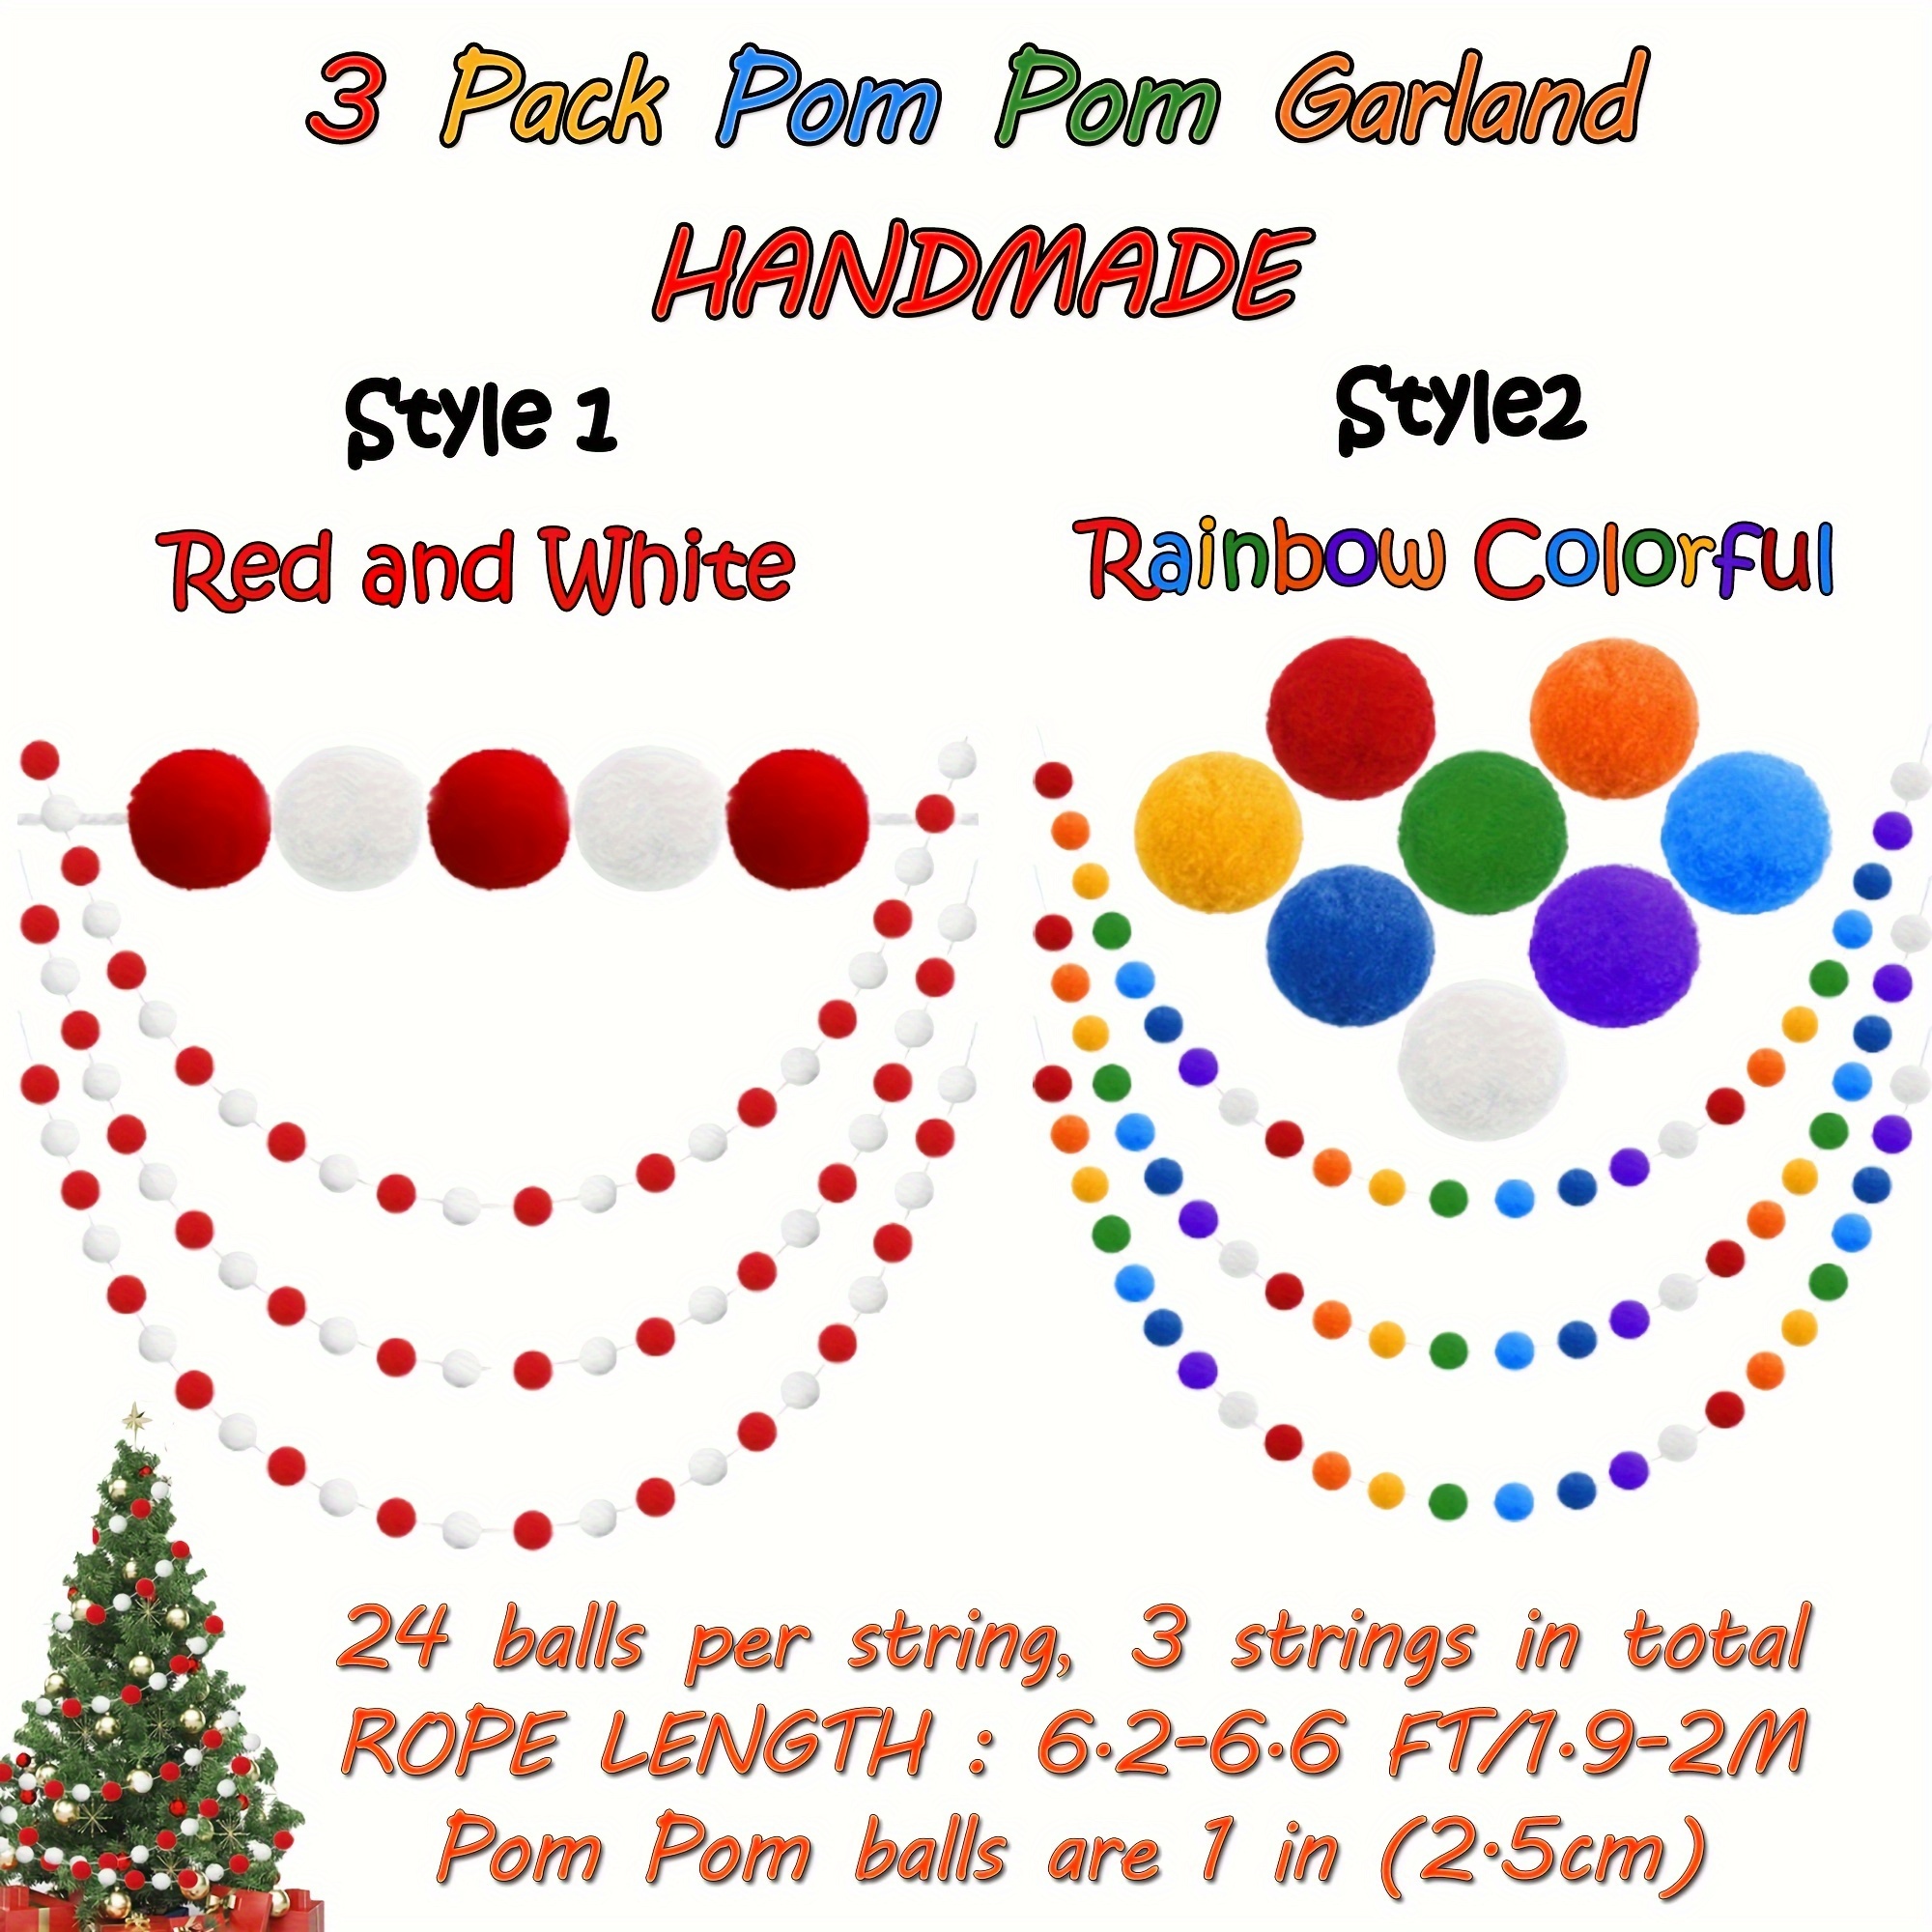 How to String a Pom Pom Garland 